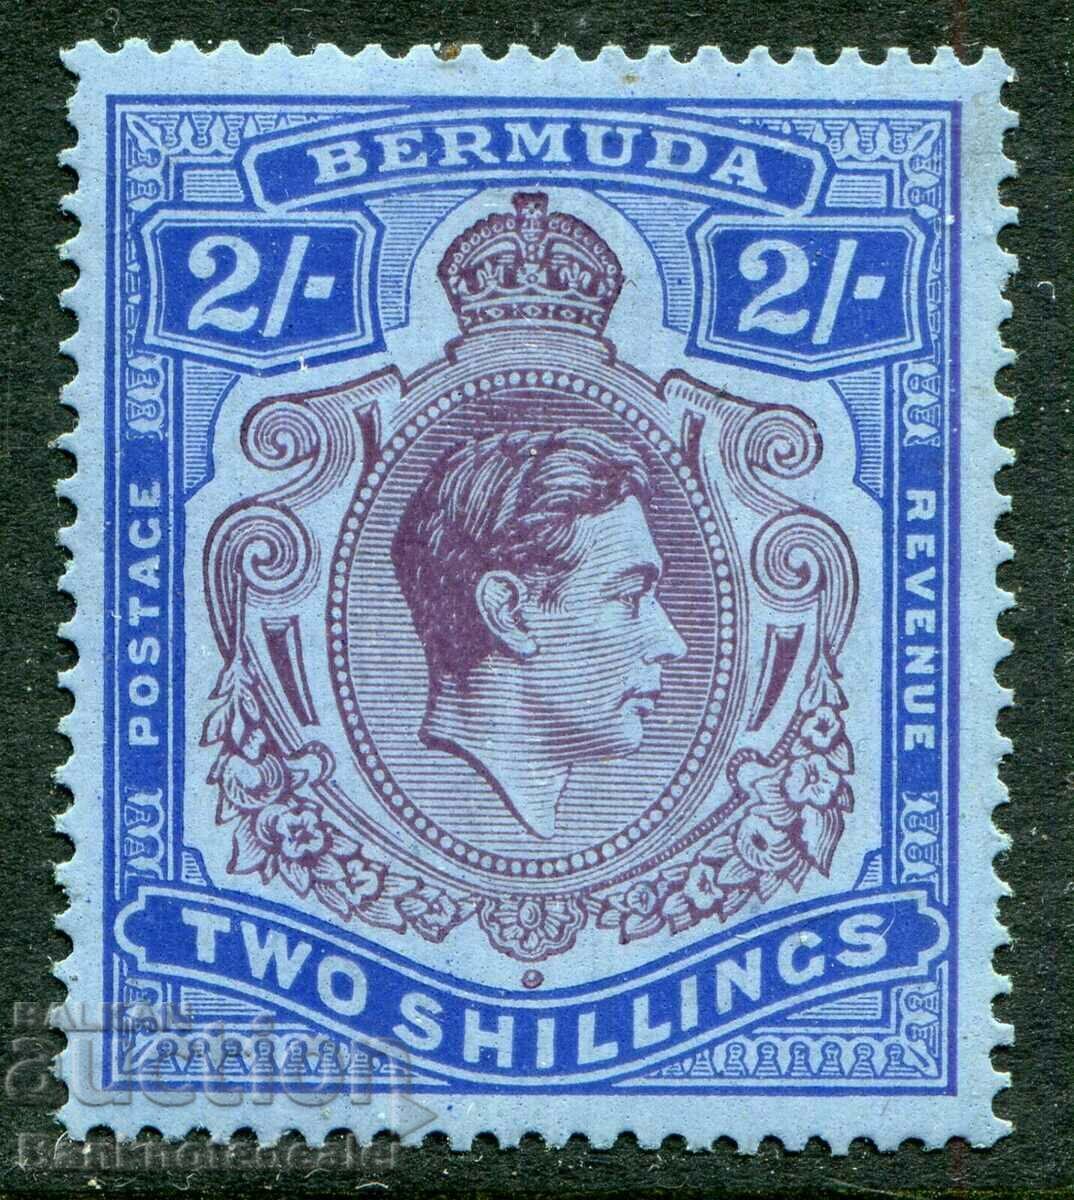 Bermuda  2 Shillings 1938  SG116 MH cat price . £100